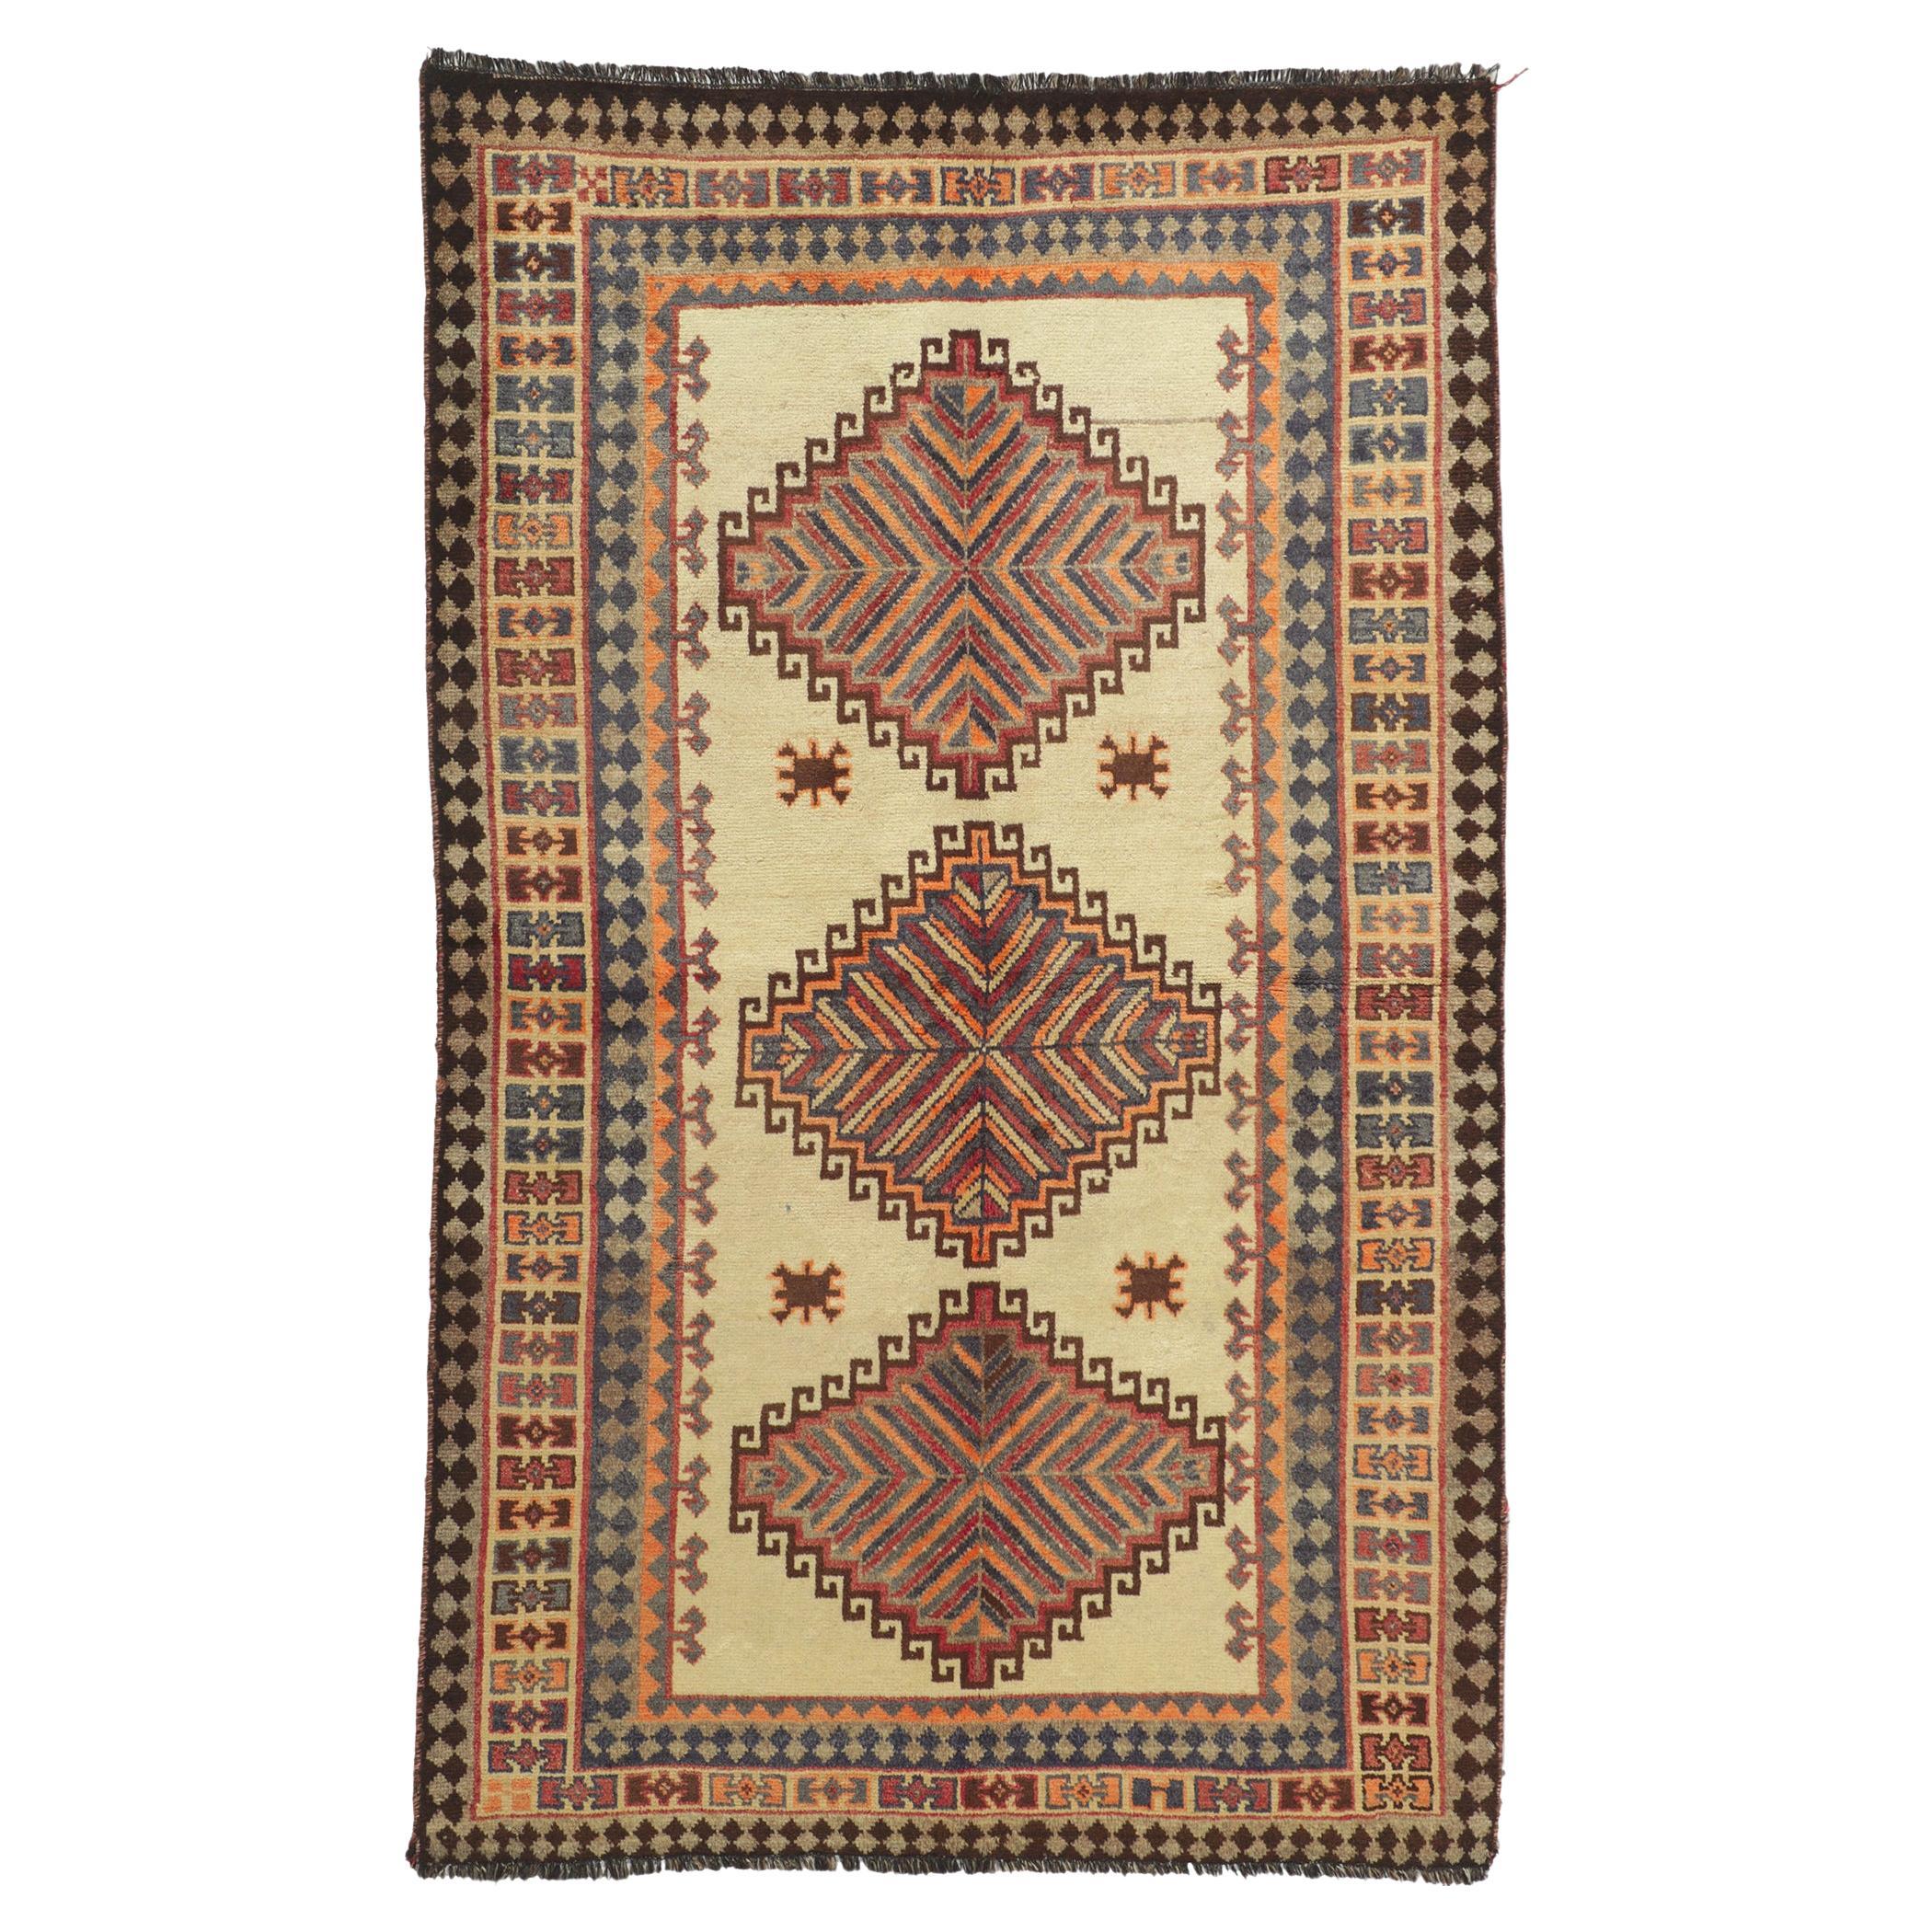 Tapis tribal persan vintage Shiraz de couleur terre